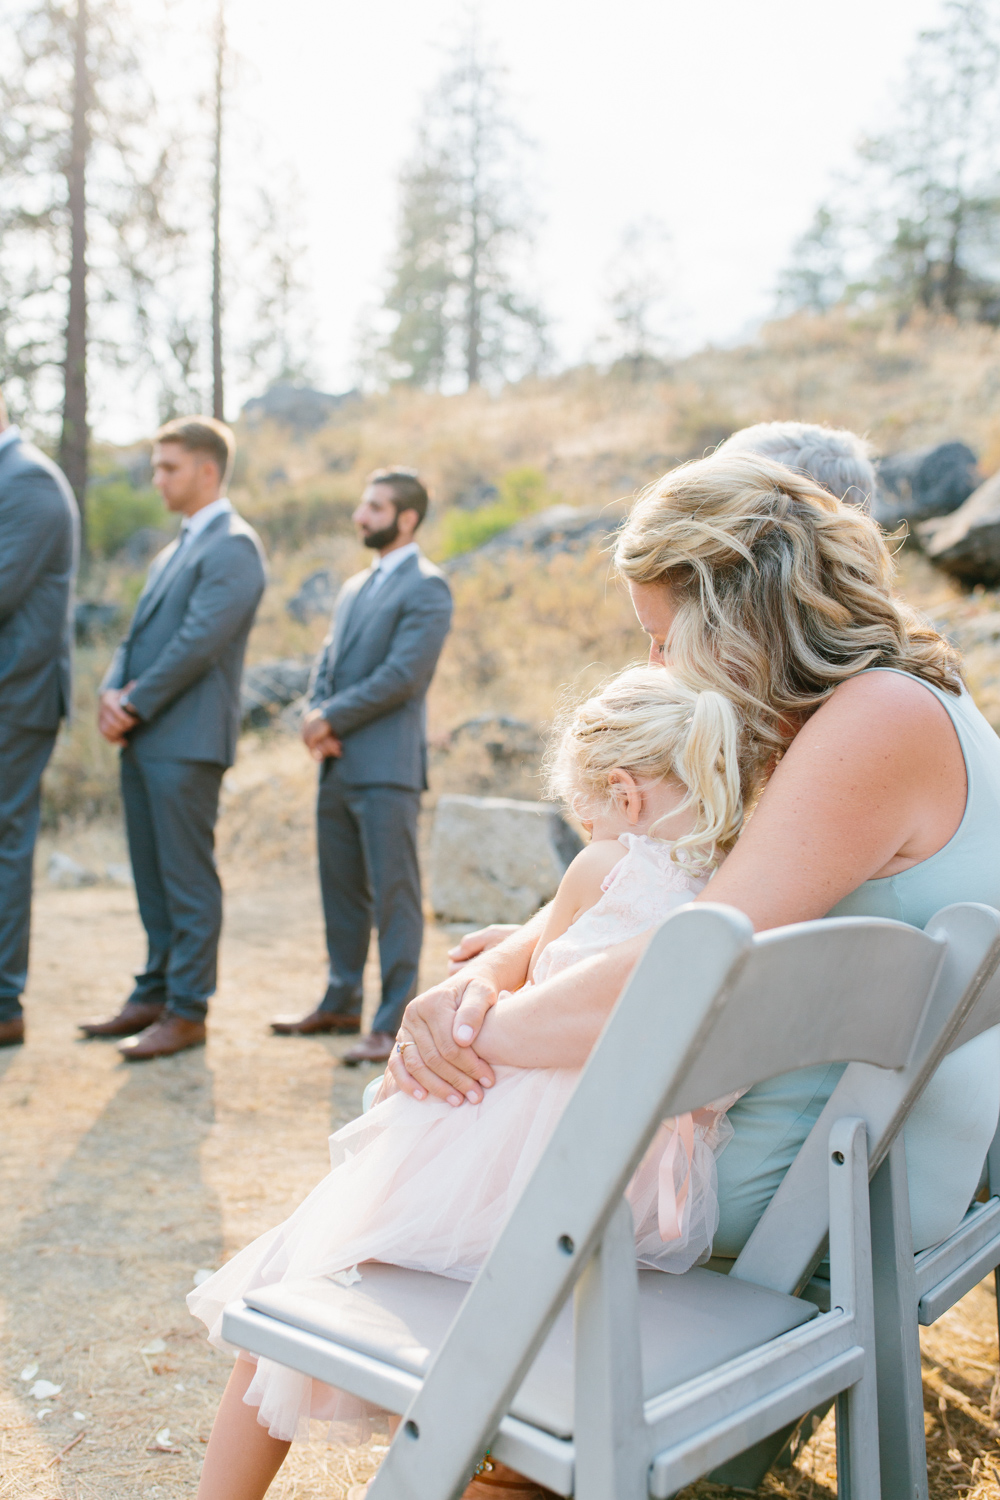 Grey and White Wedding in the Mountains of Leavenworth, Washington | Sleeping Lady | Classic and Timeless Wedding | VSCO | Leavenworth Wedding Ceremony at Sleeping Lady.jpg-1128.jpg